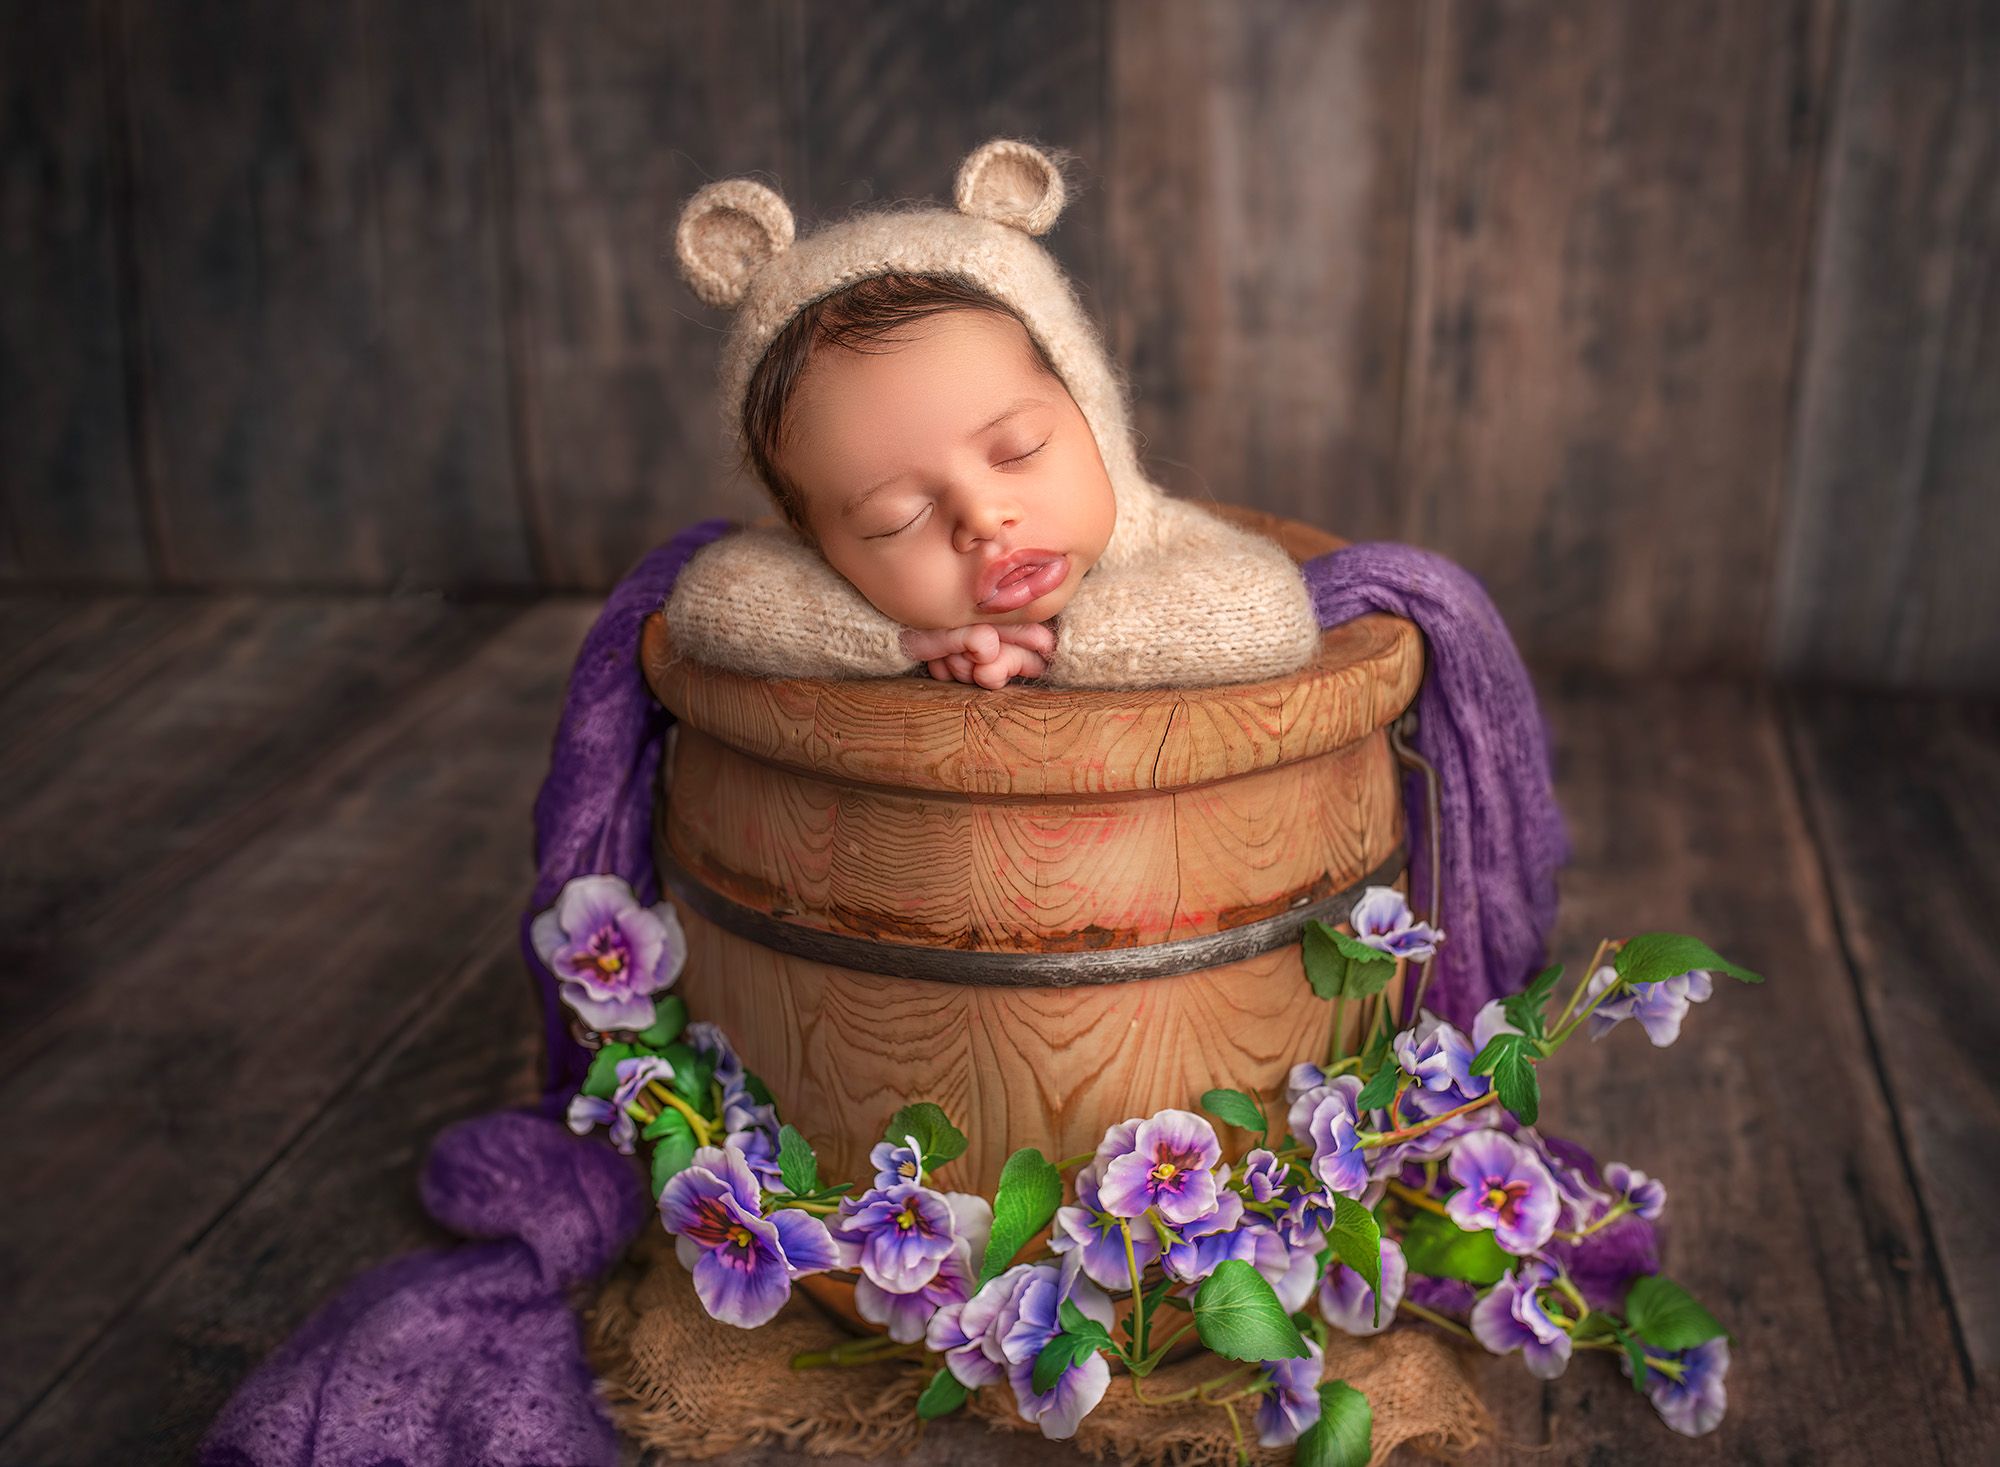 newborn photoshoot newborn baby dressed like a teddy bear asleep in a honey bucket with purple flowers